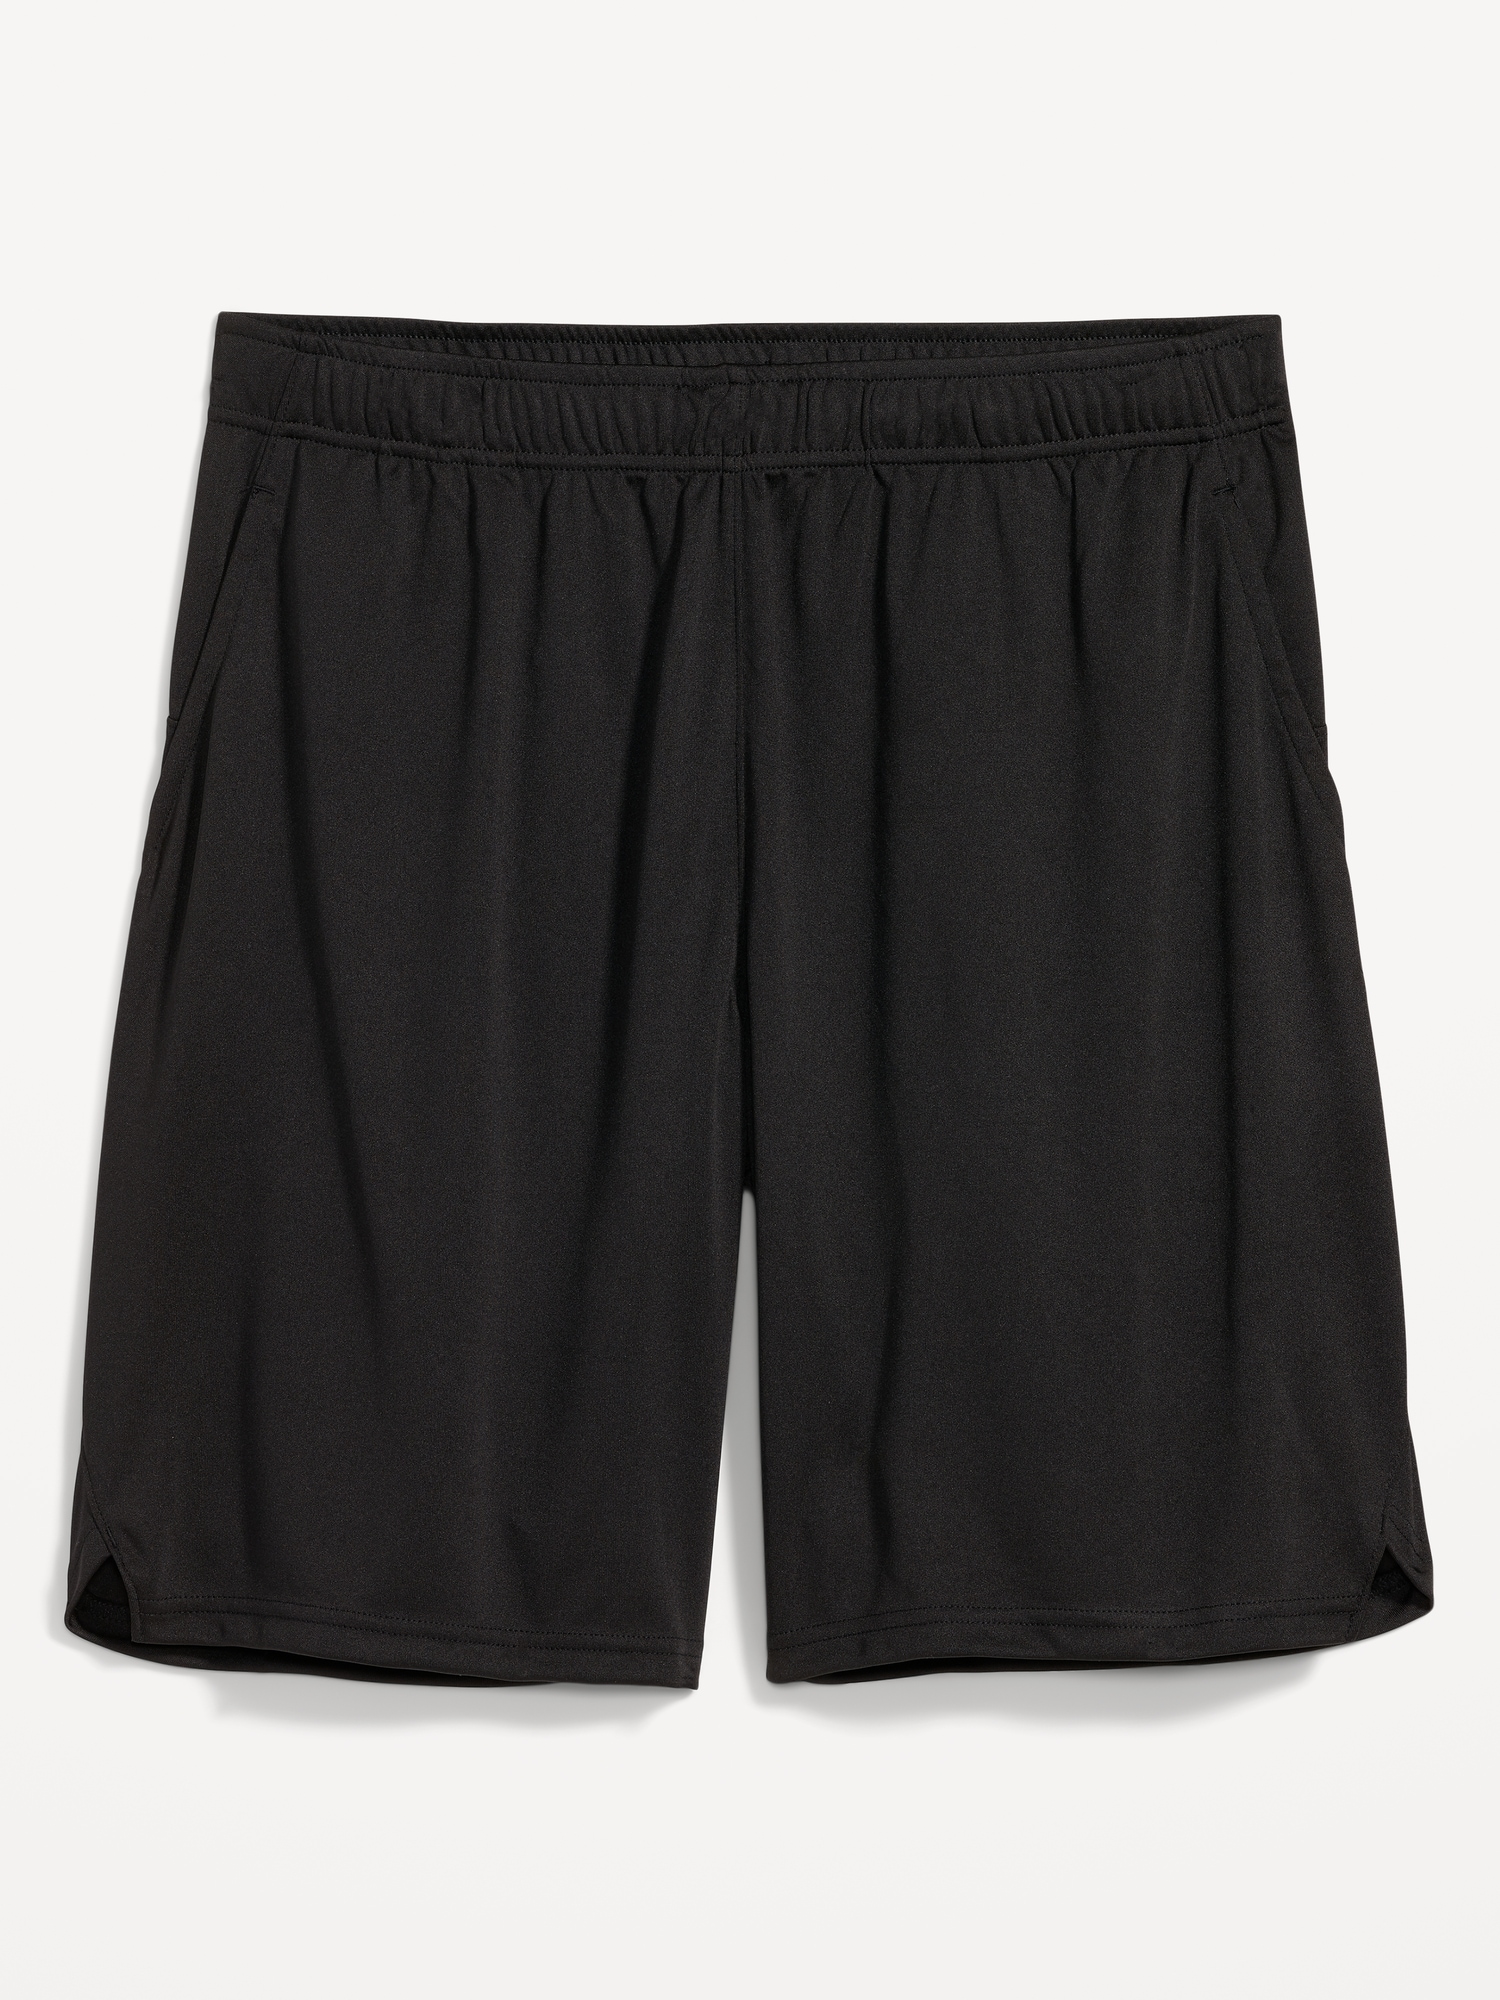 Go-Dry Mesh Basketball Shorts for Men -- 9-inch inseam